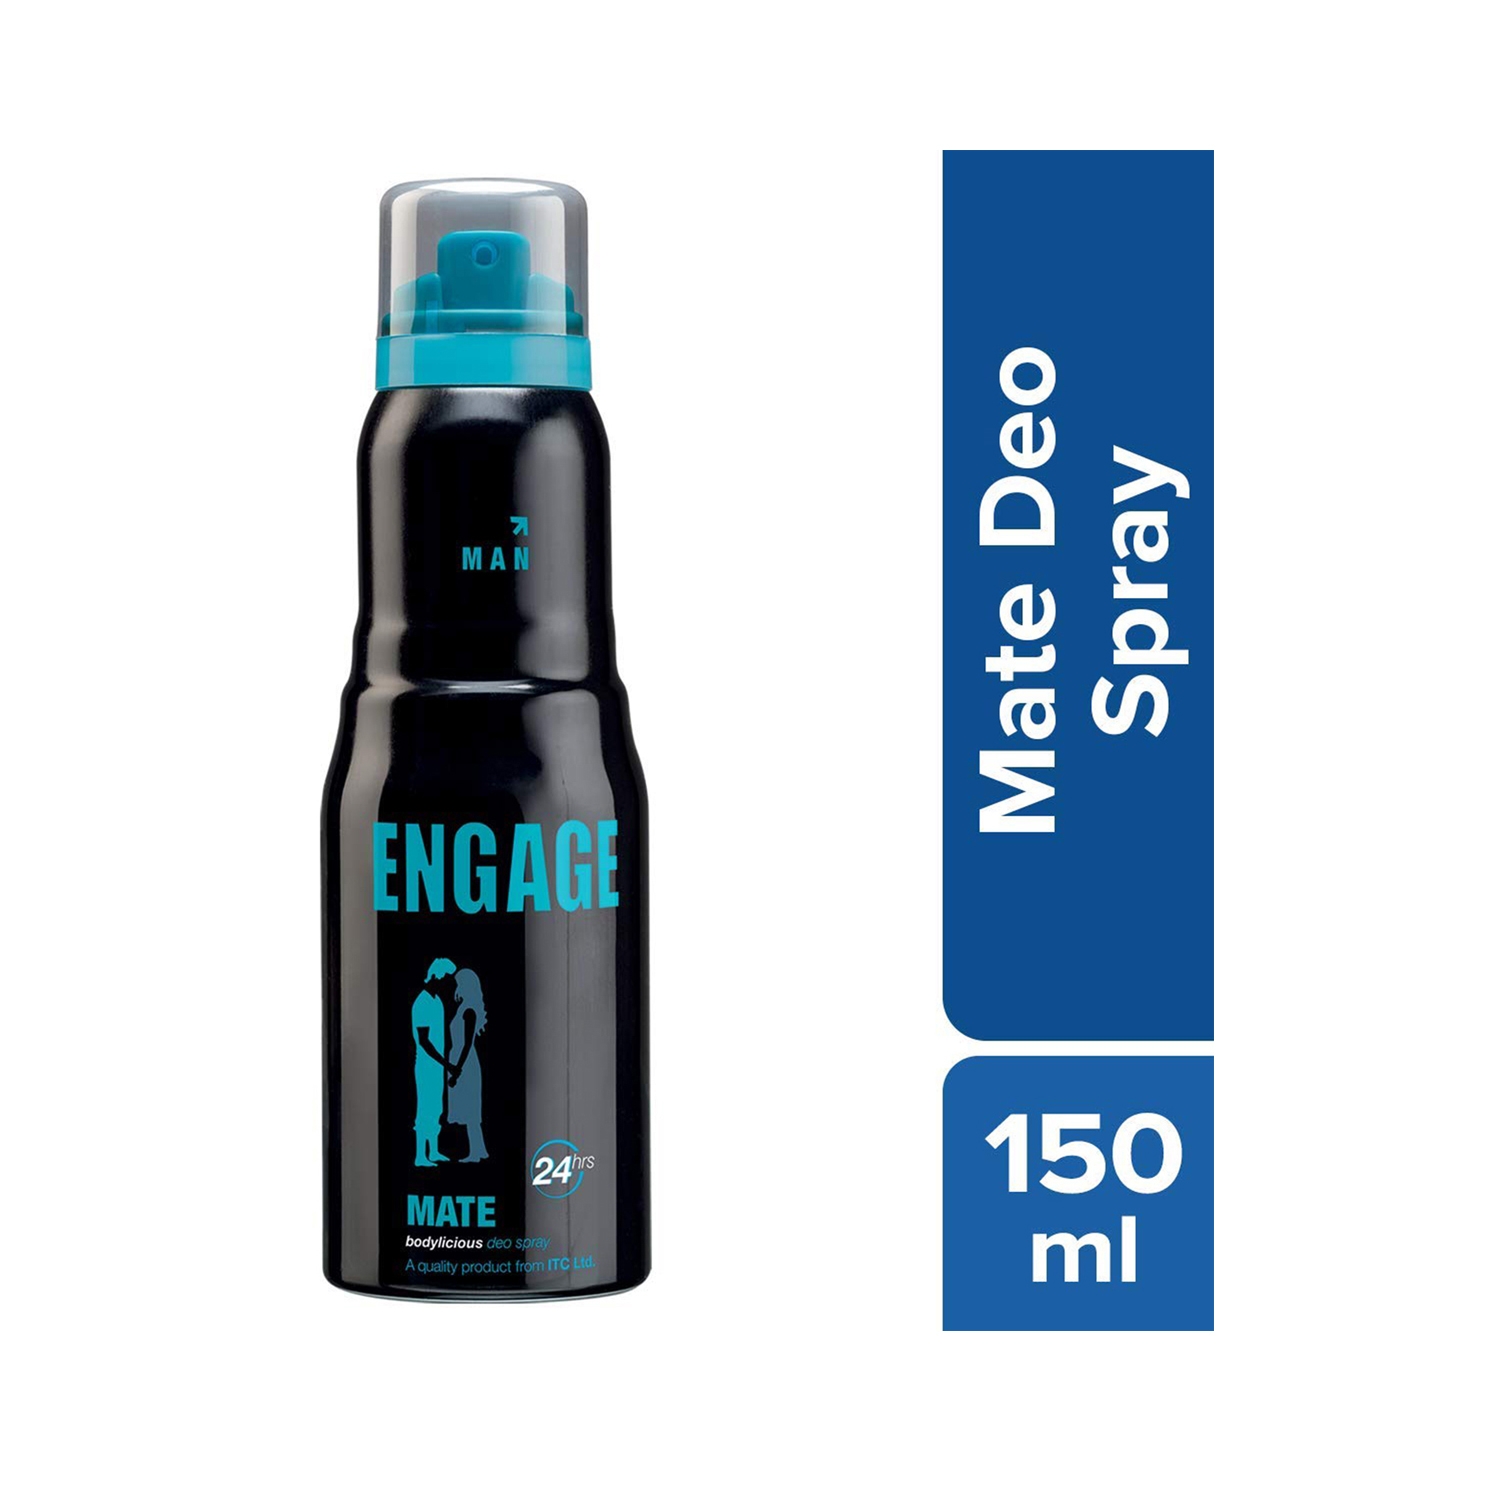 Engage Mate Deodorant Spray For Man (150ml)